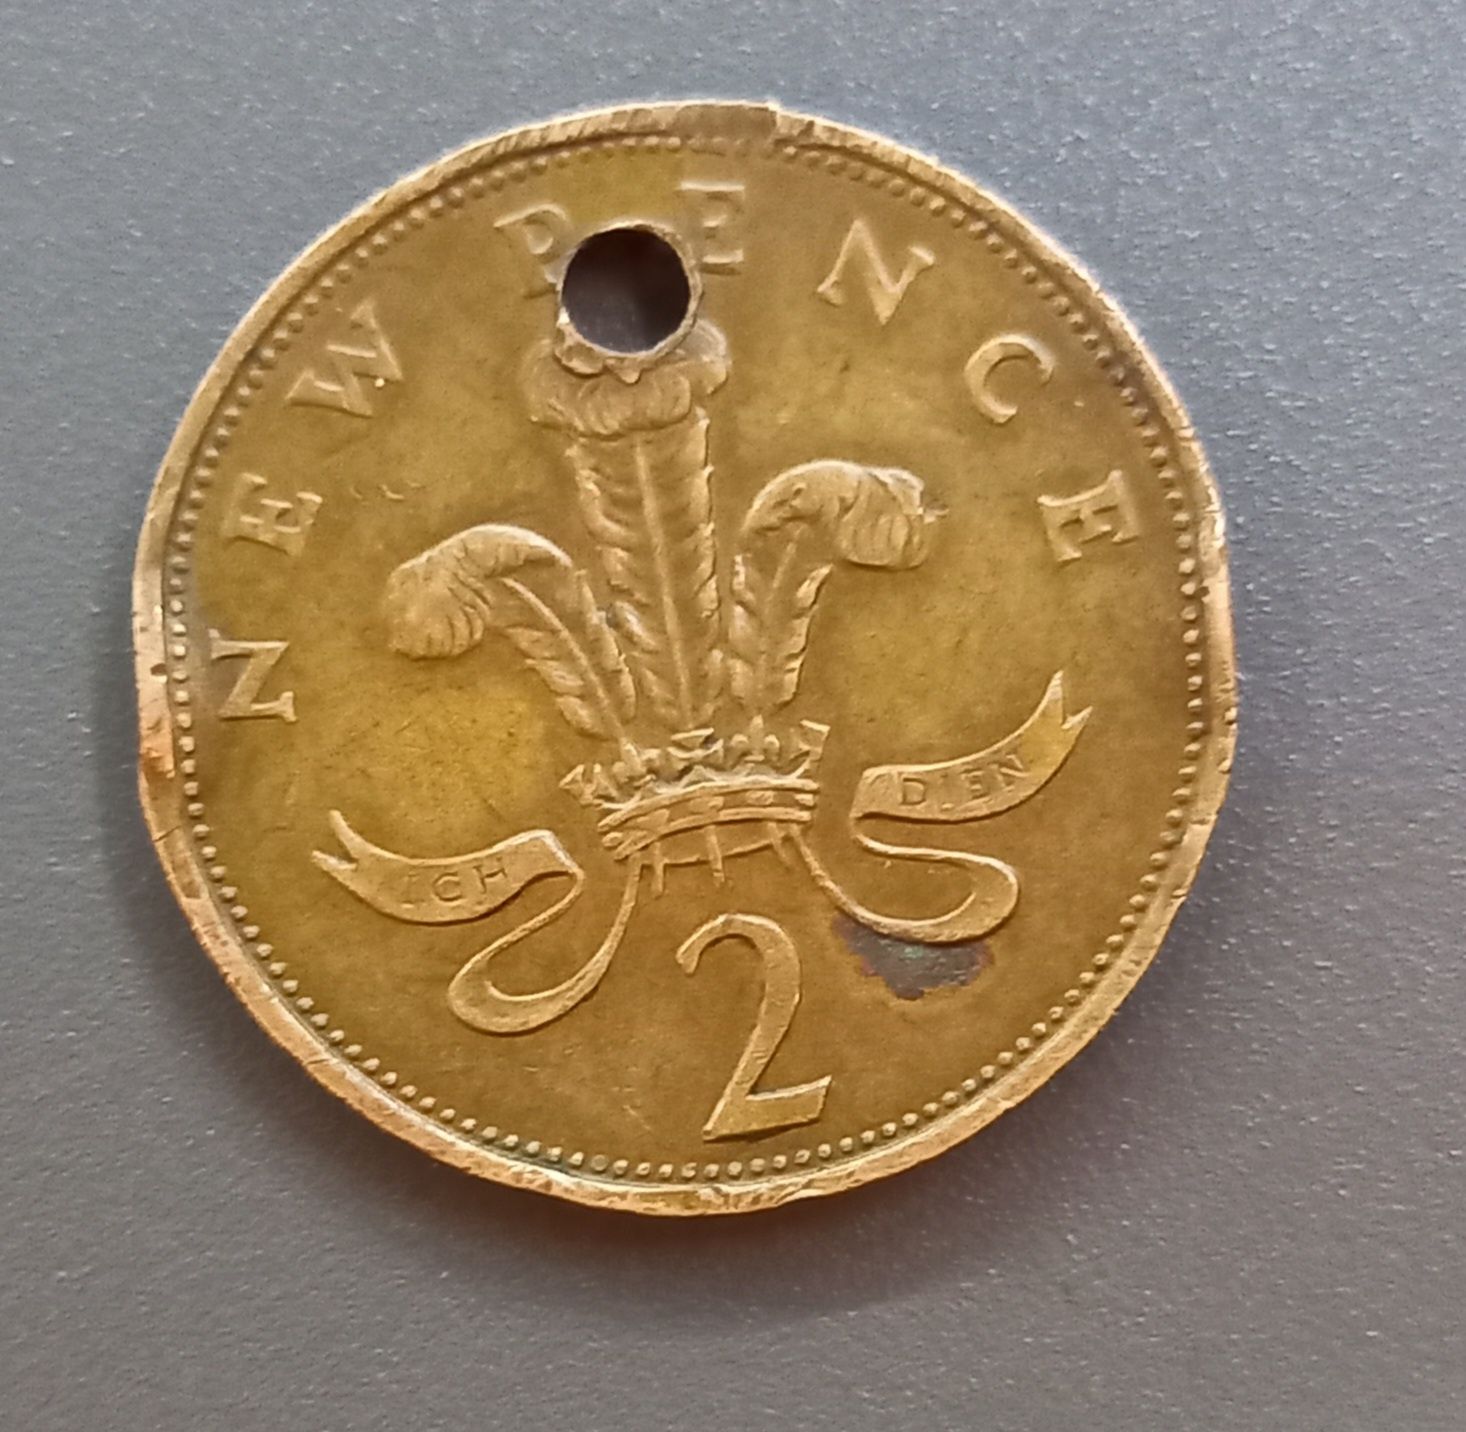 Rzadka moneta 2-p New Pence coin 1971 Elżbieta II niezwykle rzadka UK